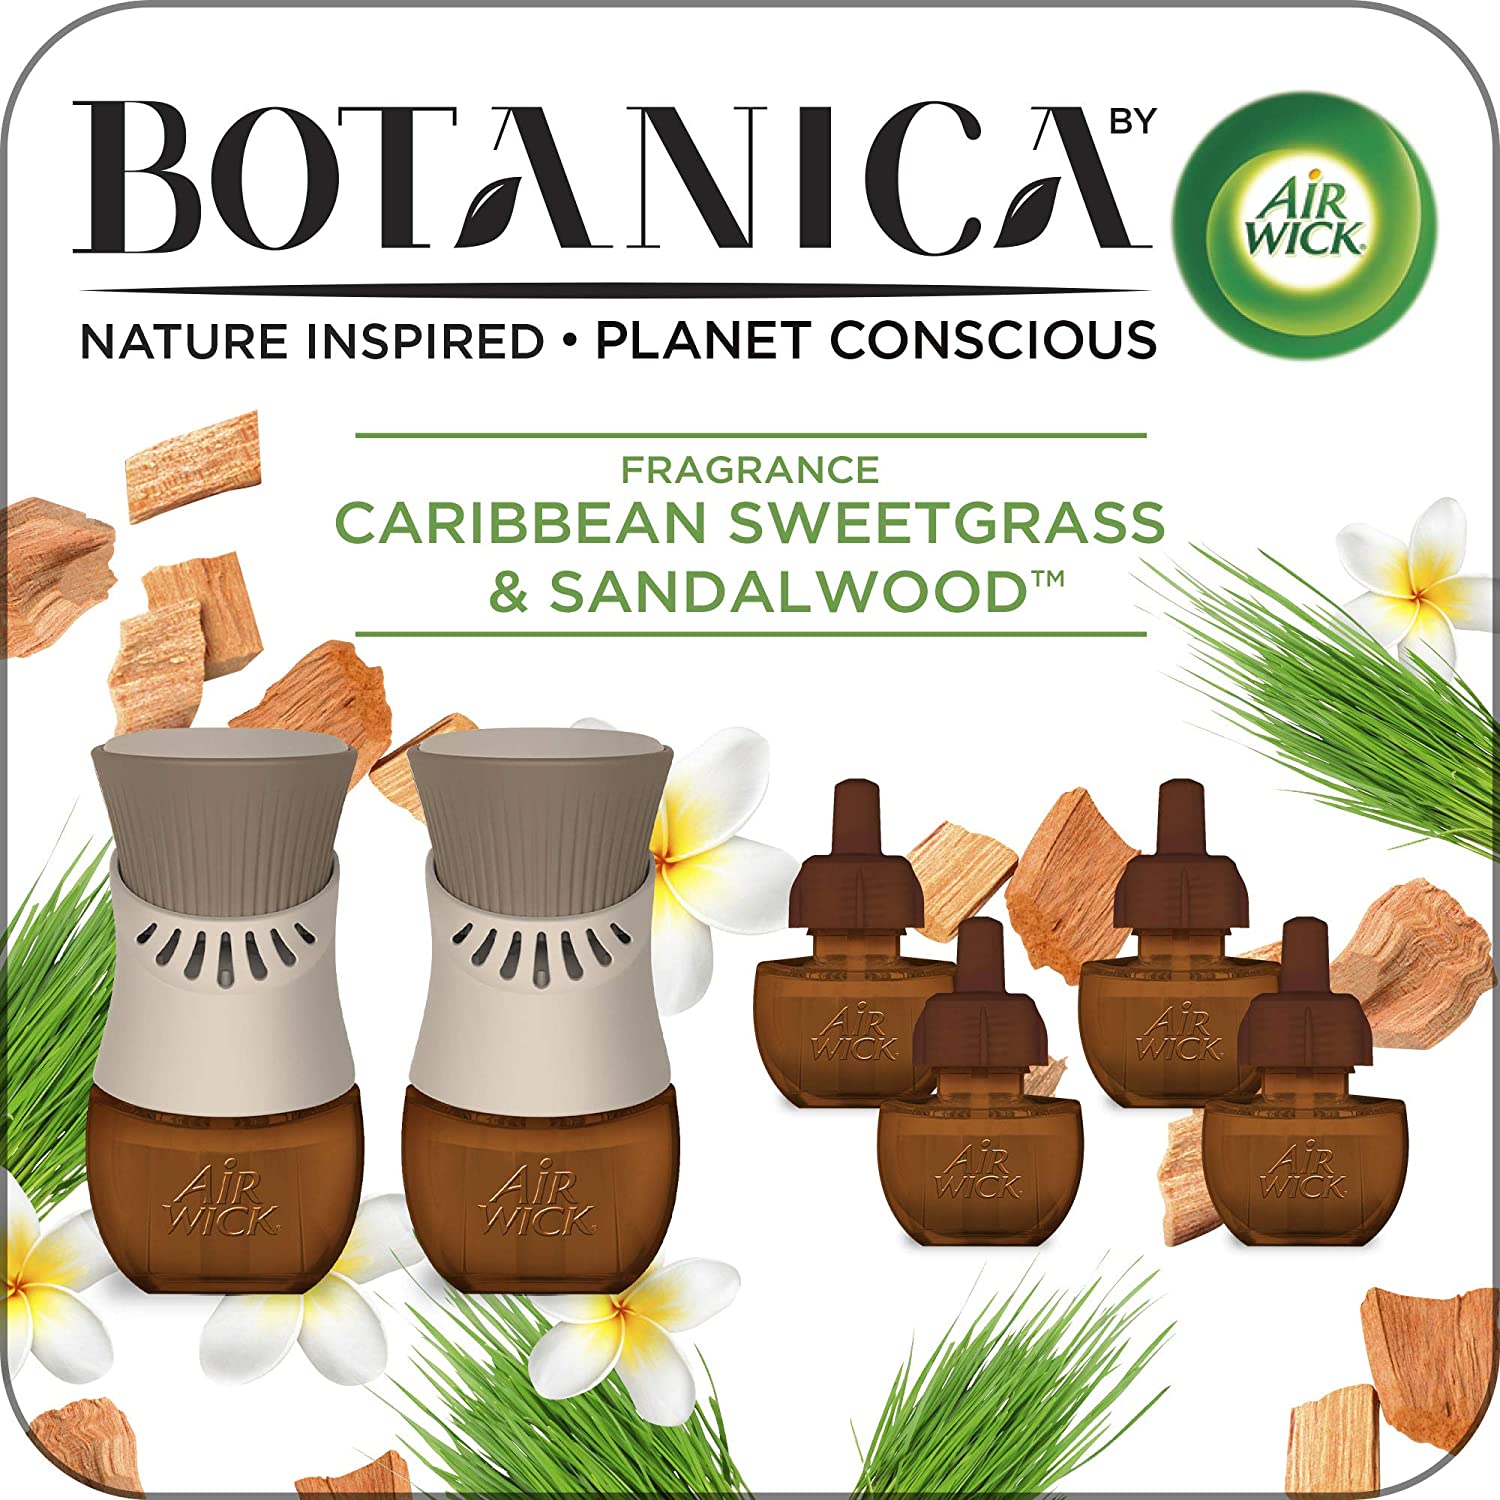 AIR WICK Botanica Scented Oil  Caribbean Sweetgrass  Sandalwood  Kit